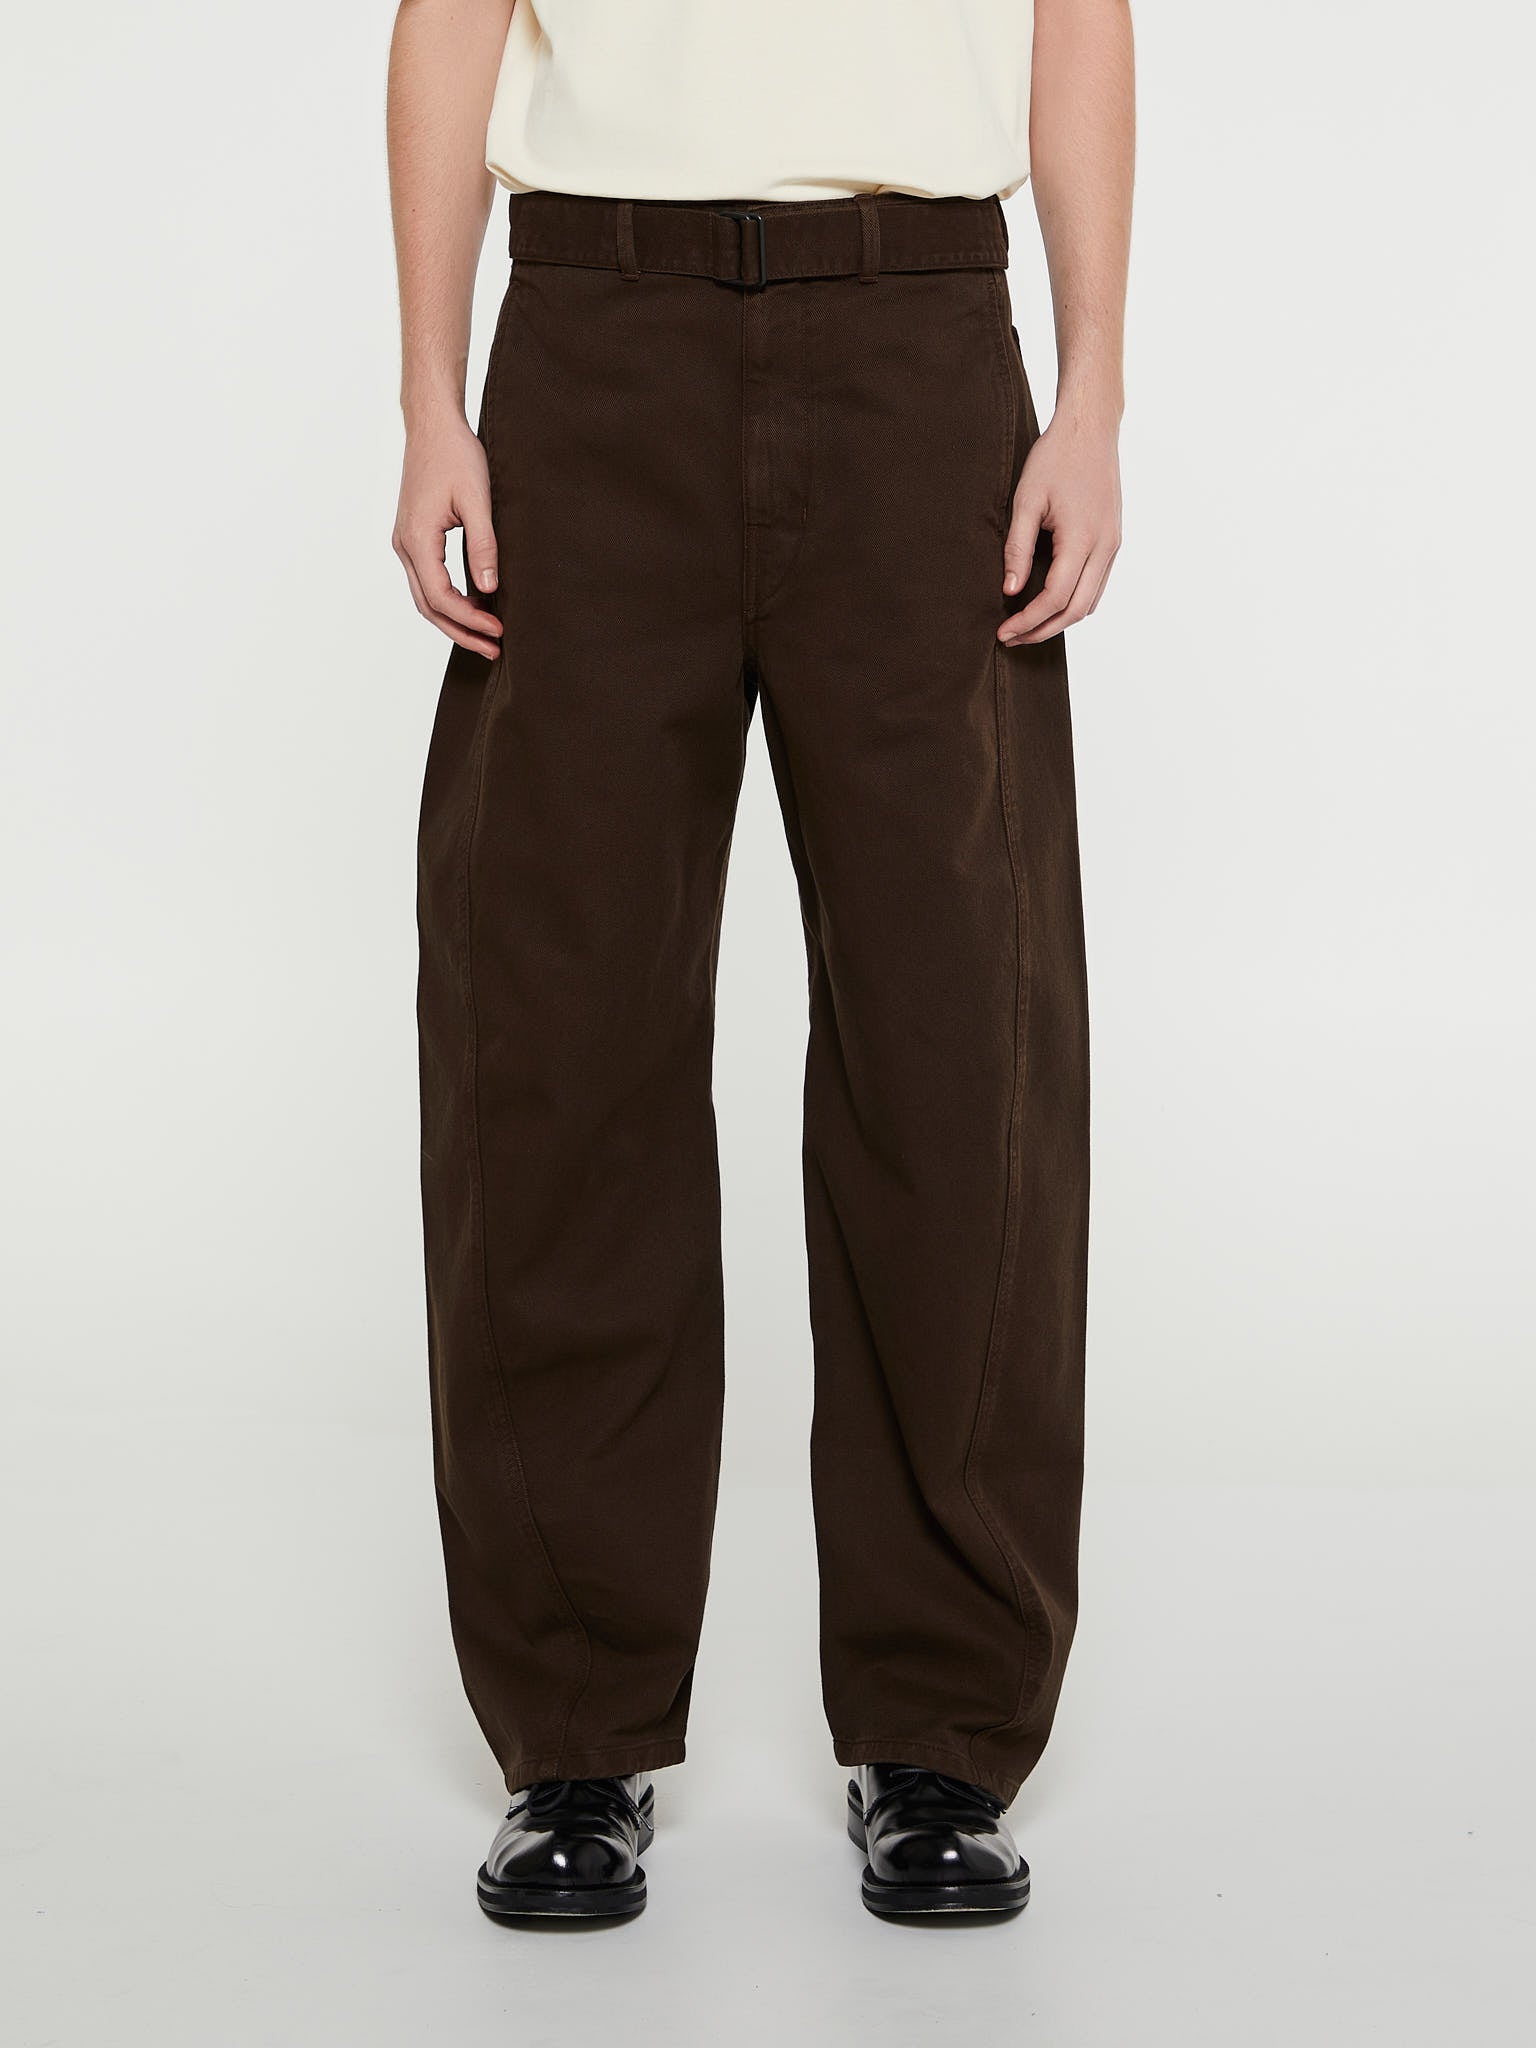 Twisted Belted Pants in Dark Brown